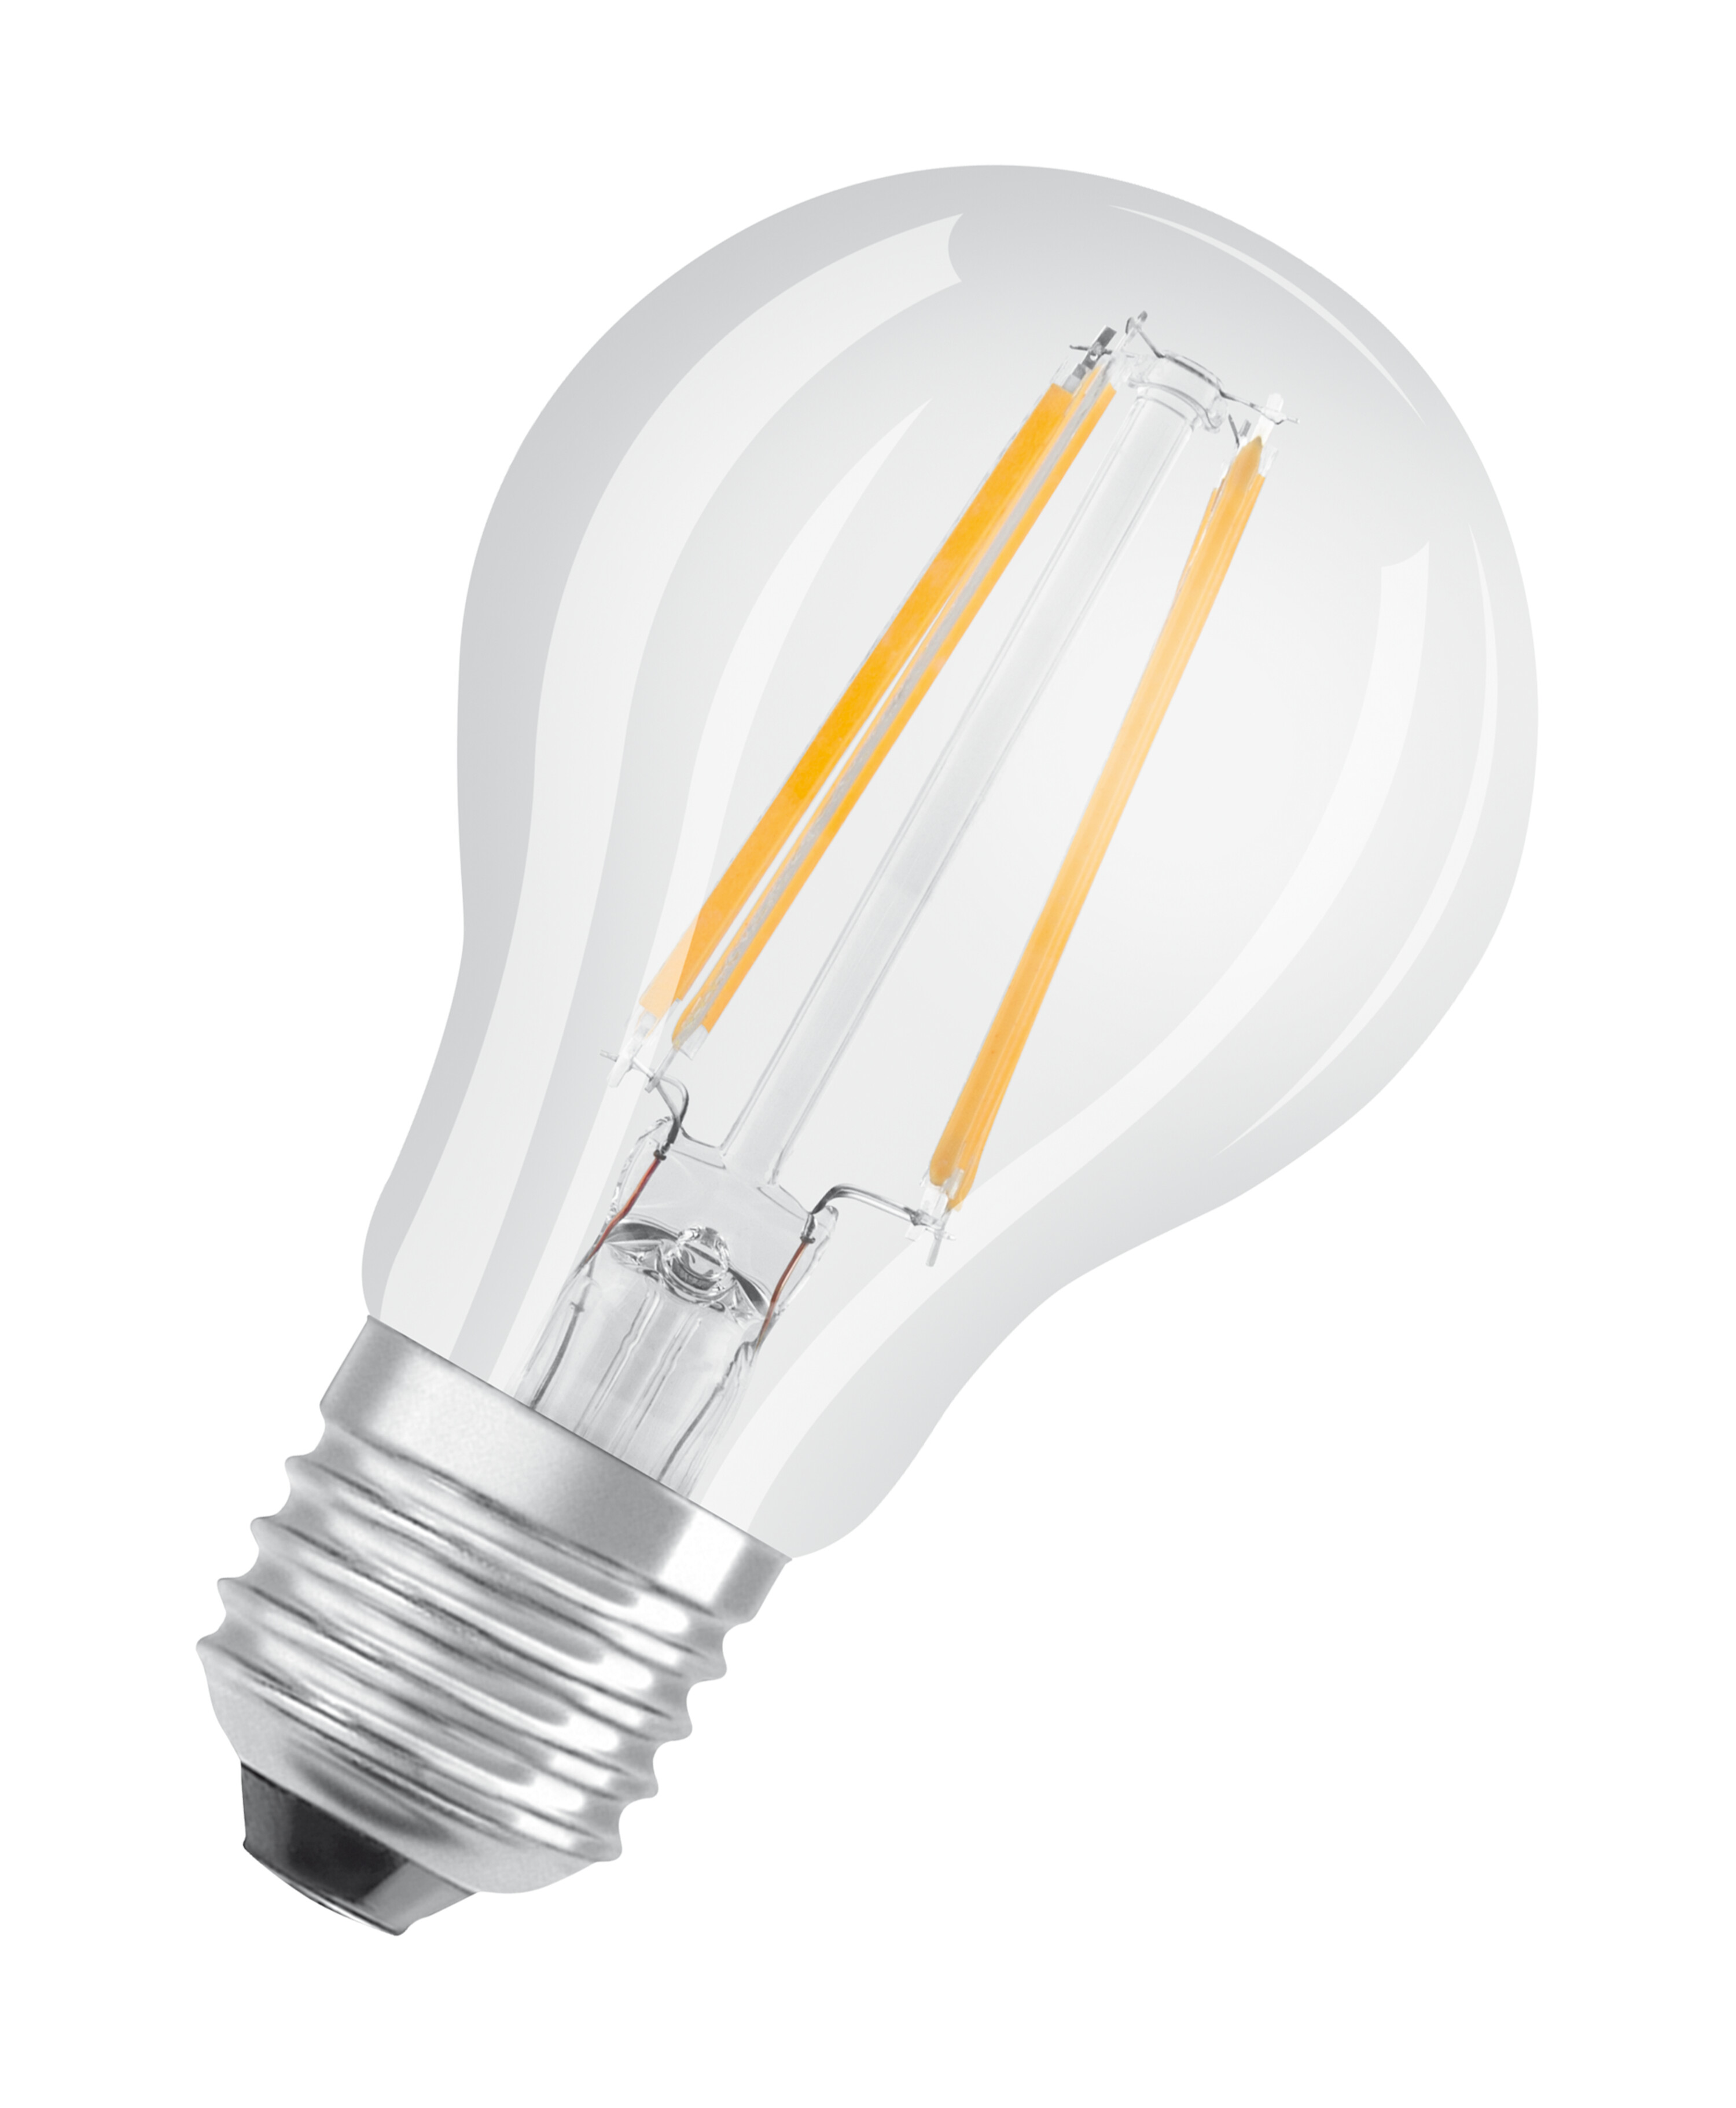 OSRAM  LED Retrofit CLASSIC A 806 Lumen Lampe LED Kaltweiß